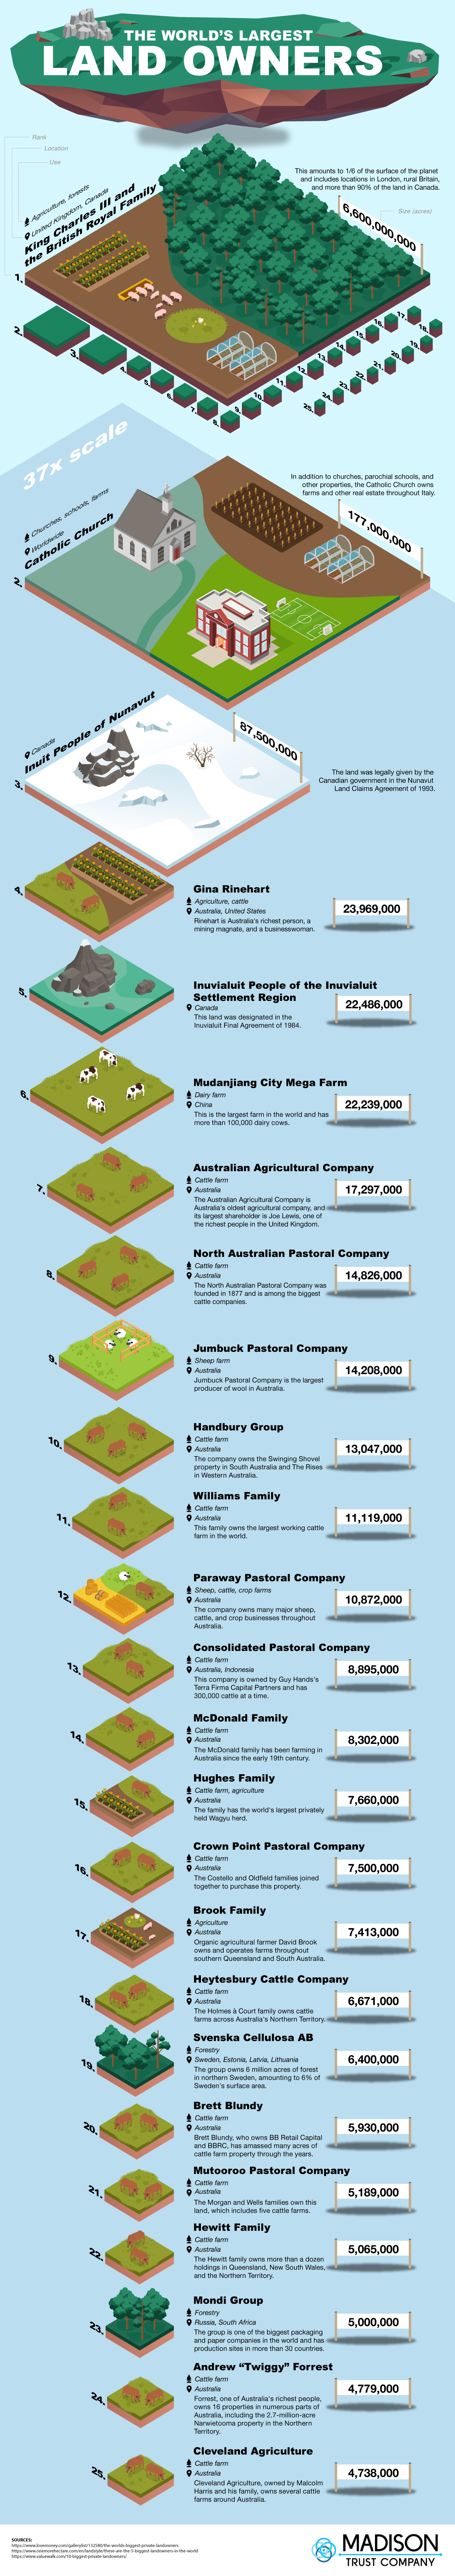 The World’s Largest Landowners - MadisonTrust.com IRA - Infographic